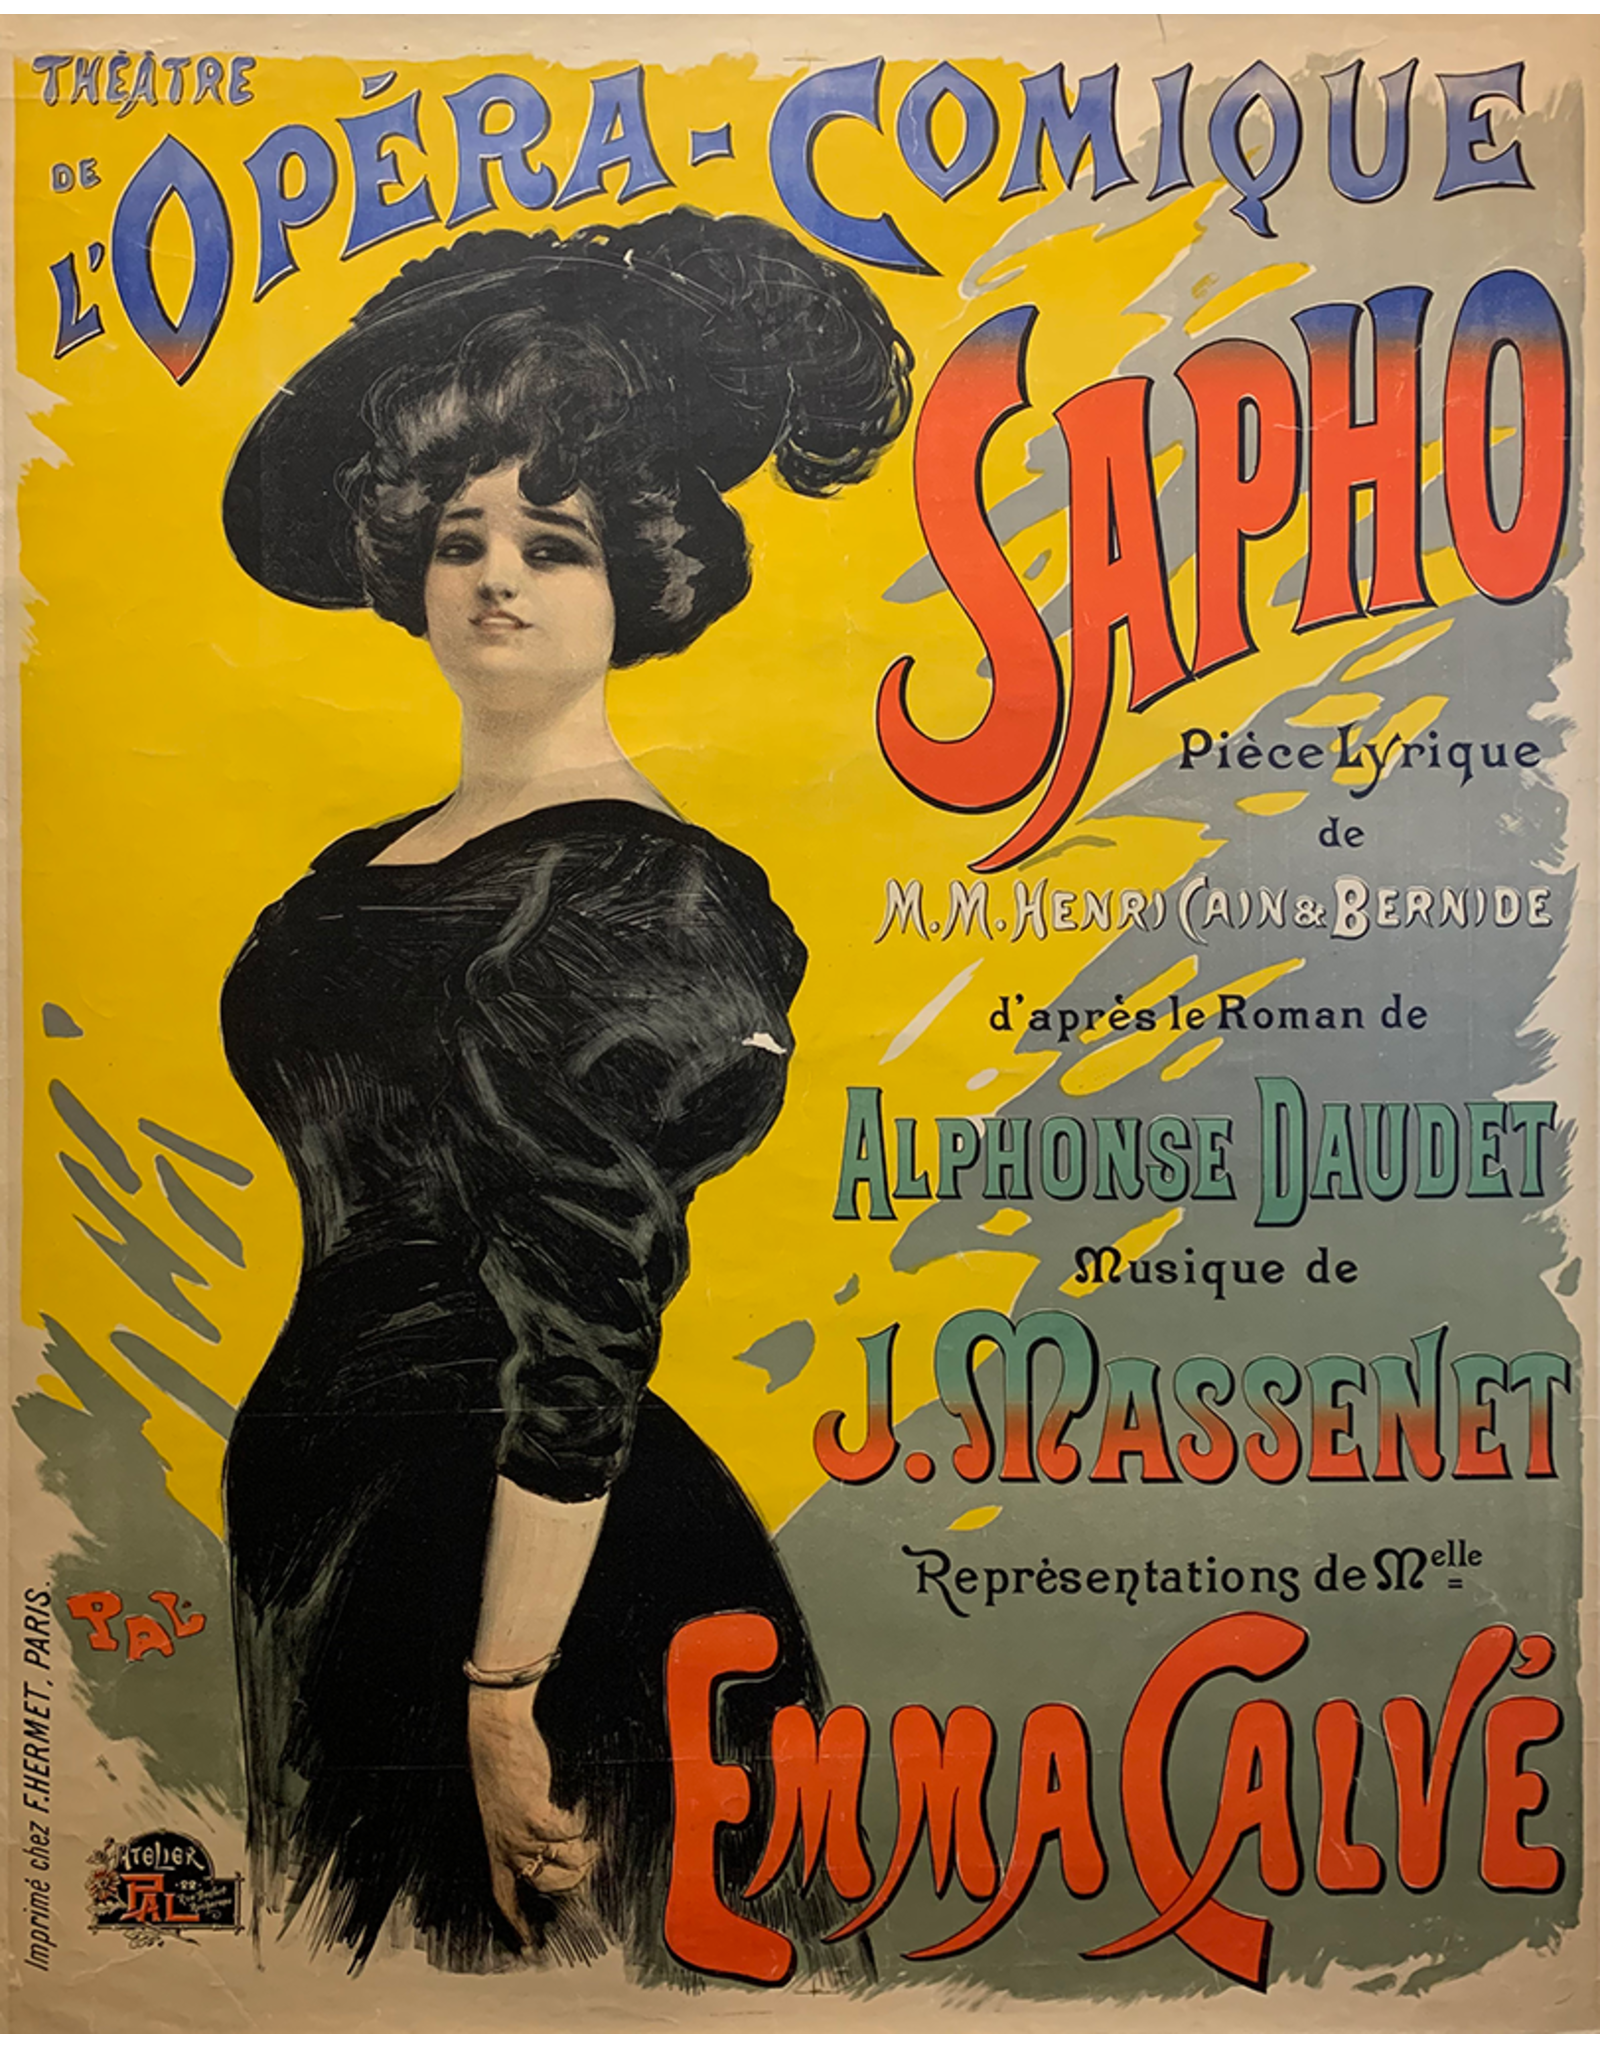 SPV Theatre de Opera, Comique Sapho